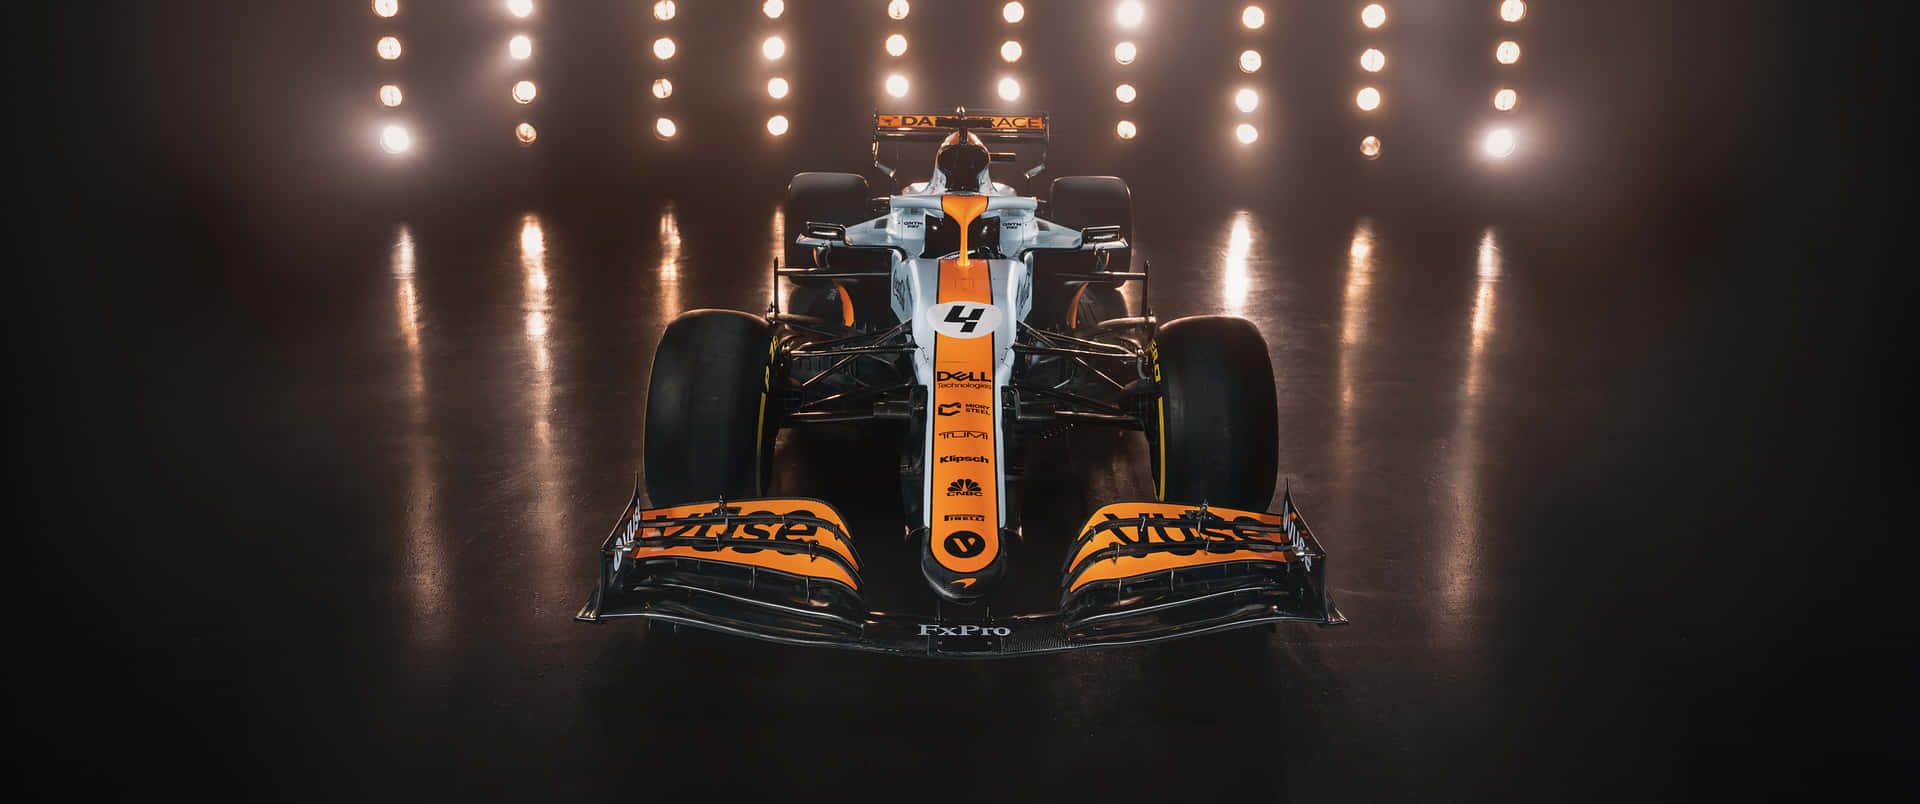 "No Limits: Drive with the Podium-winning Mclaren Formula 1 Team" Wallpaper